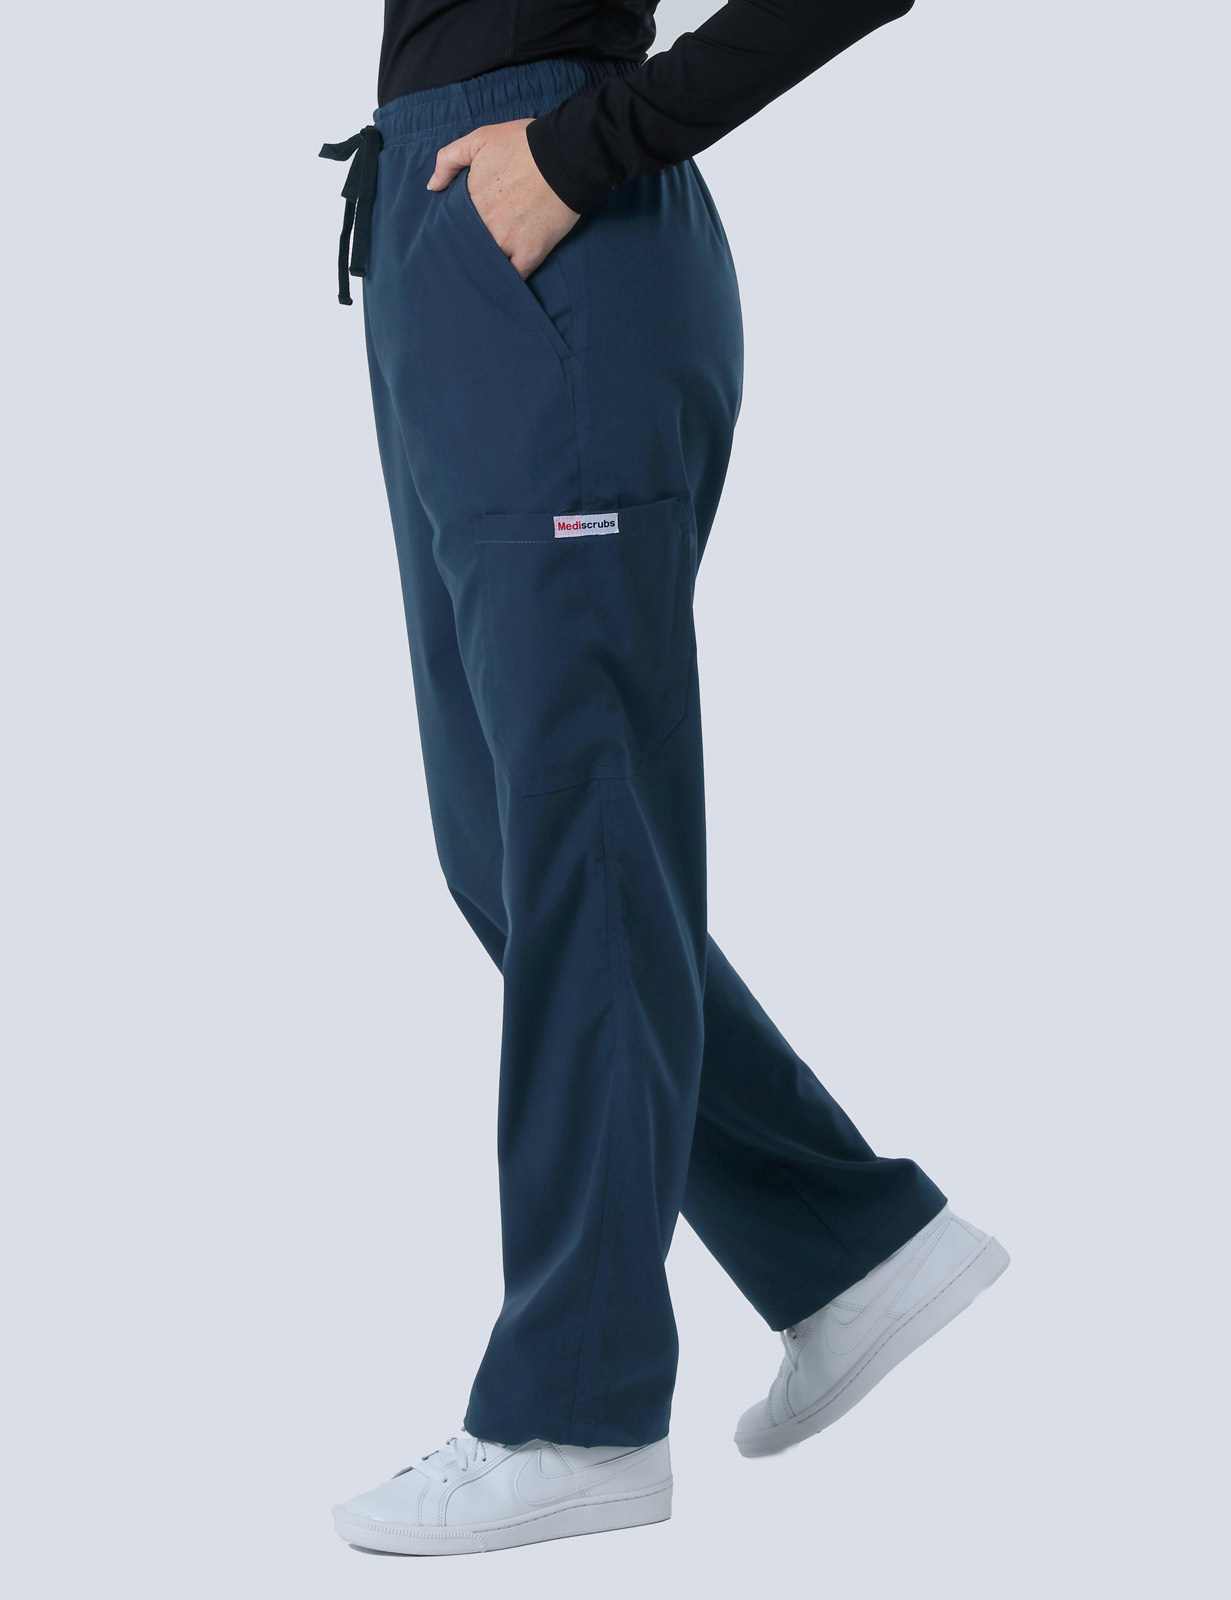 Ipswich Hospital Nurse - Ward 7C Uniform Set Bundle (Women's Fit Solid Top and Cargo Pants in Navy incl Logos)